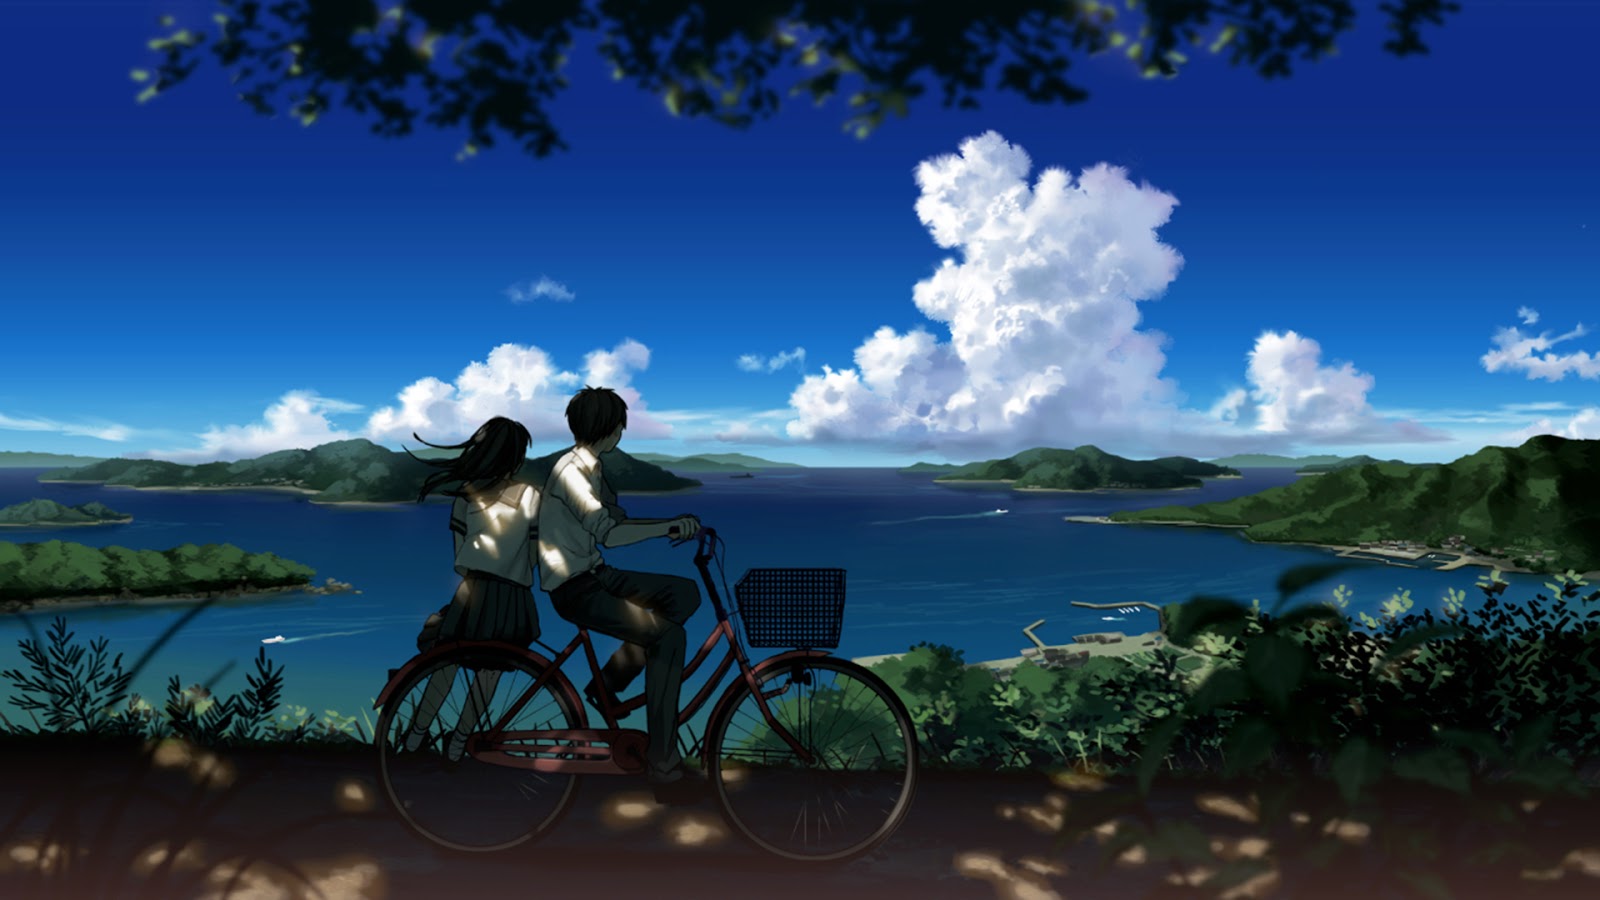 Wallpaper Scenery Anime Indah Keren Kece Mempesona Gua Bagi Wp